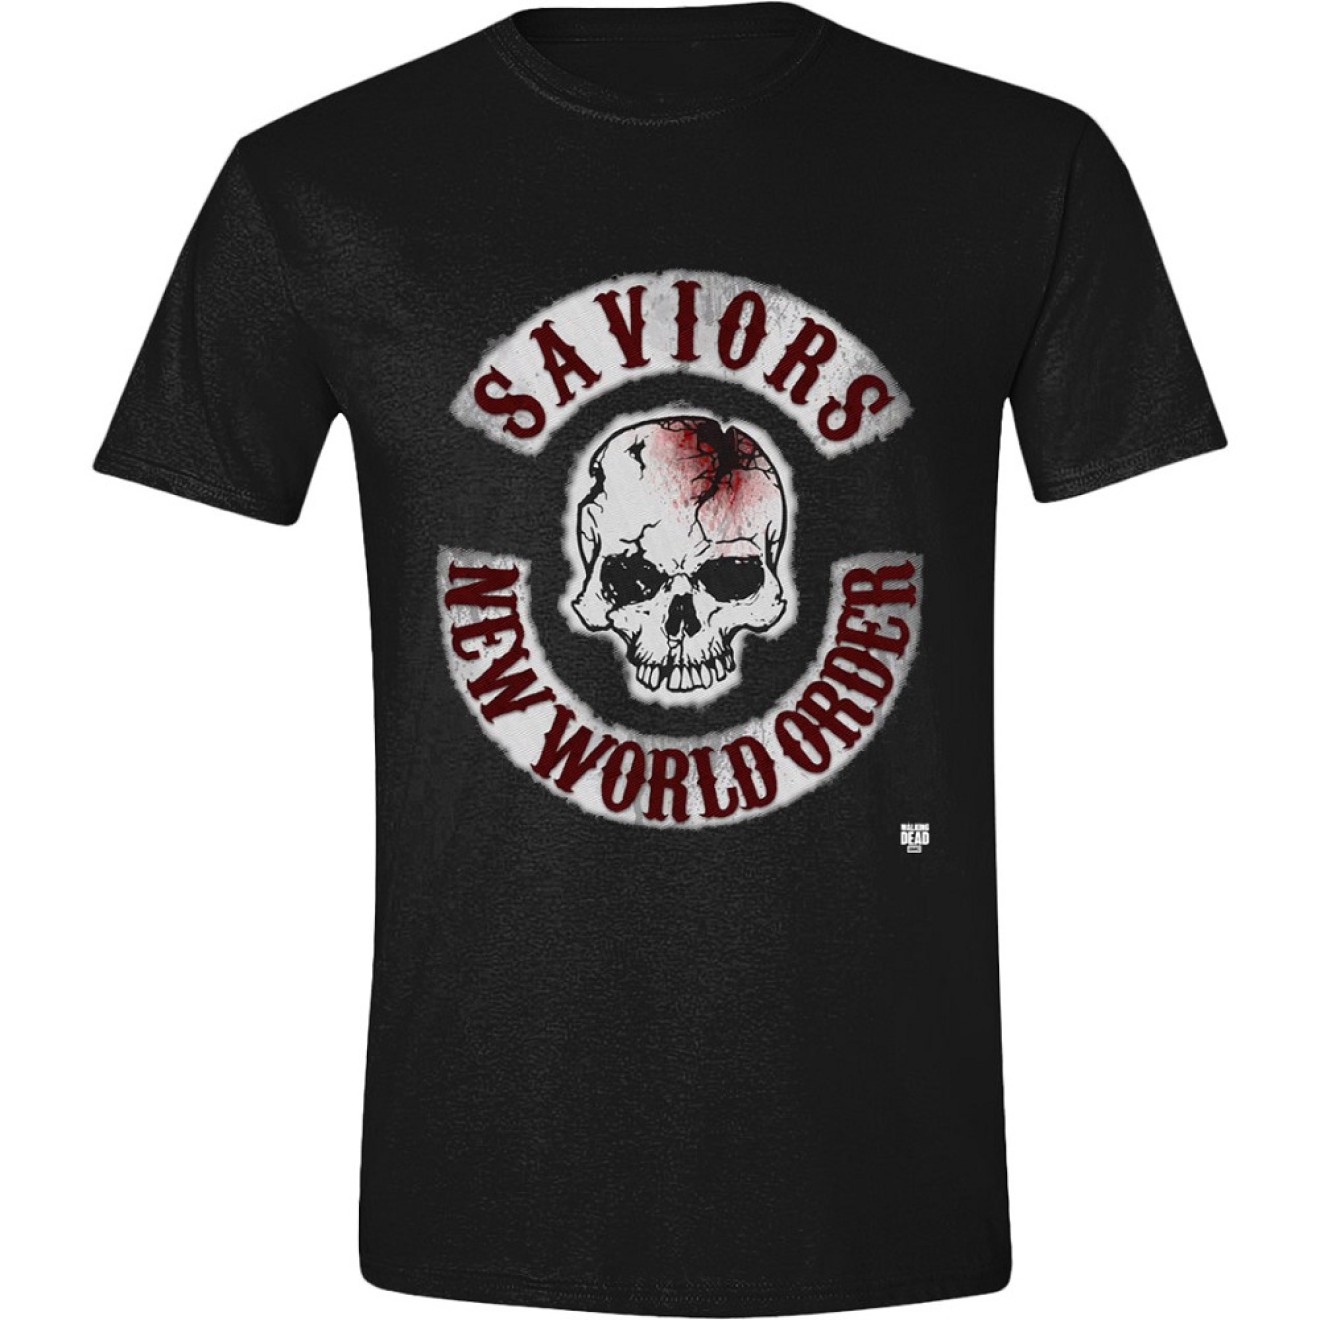 The Walking Dead - Saviors New World Order T-Shirt